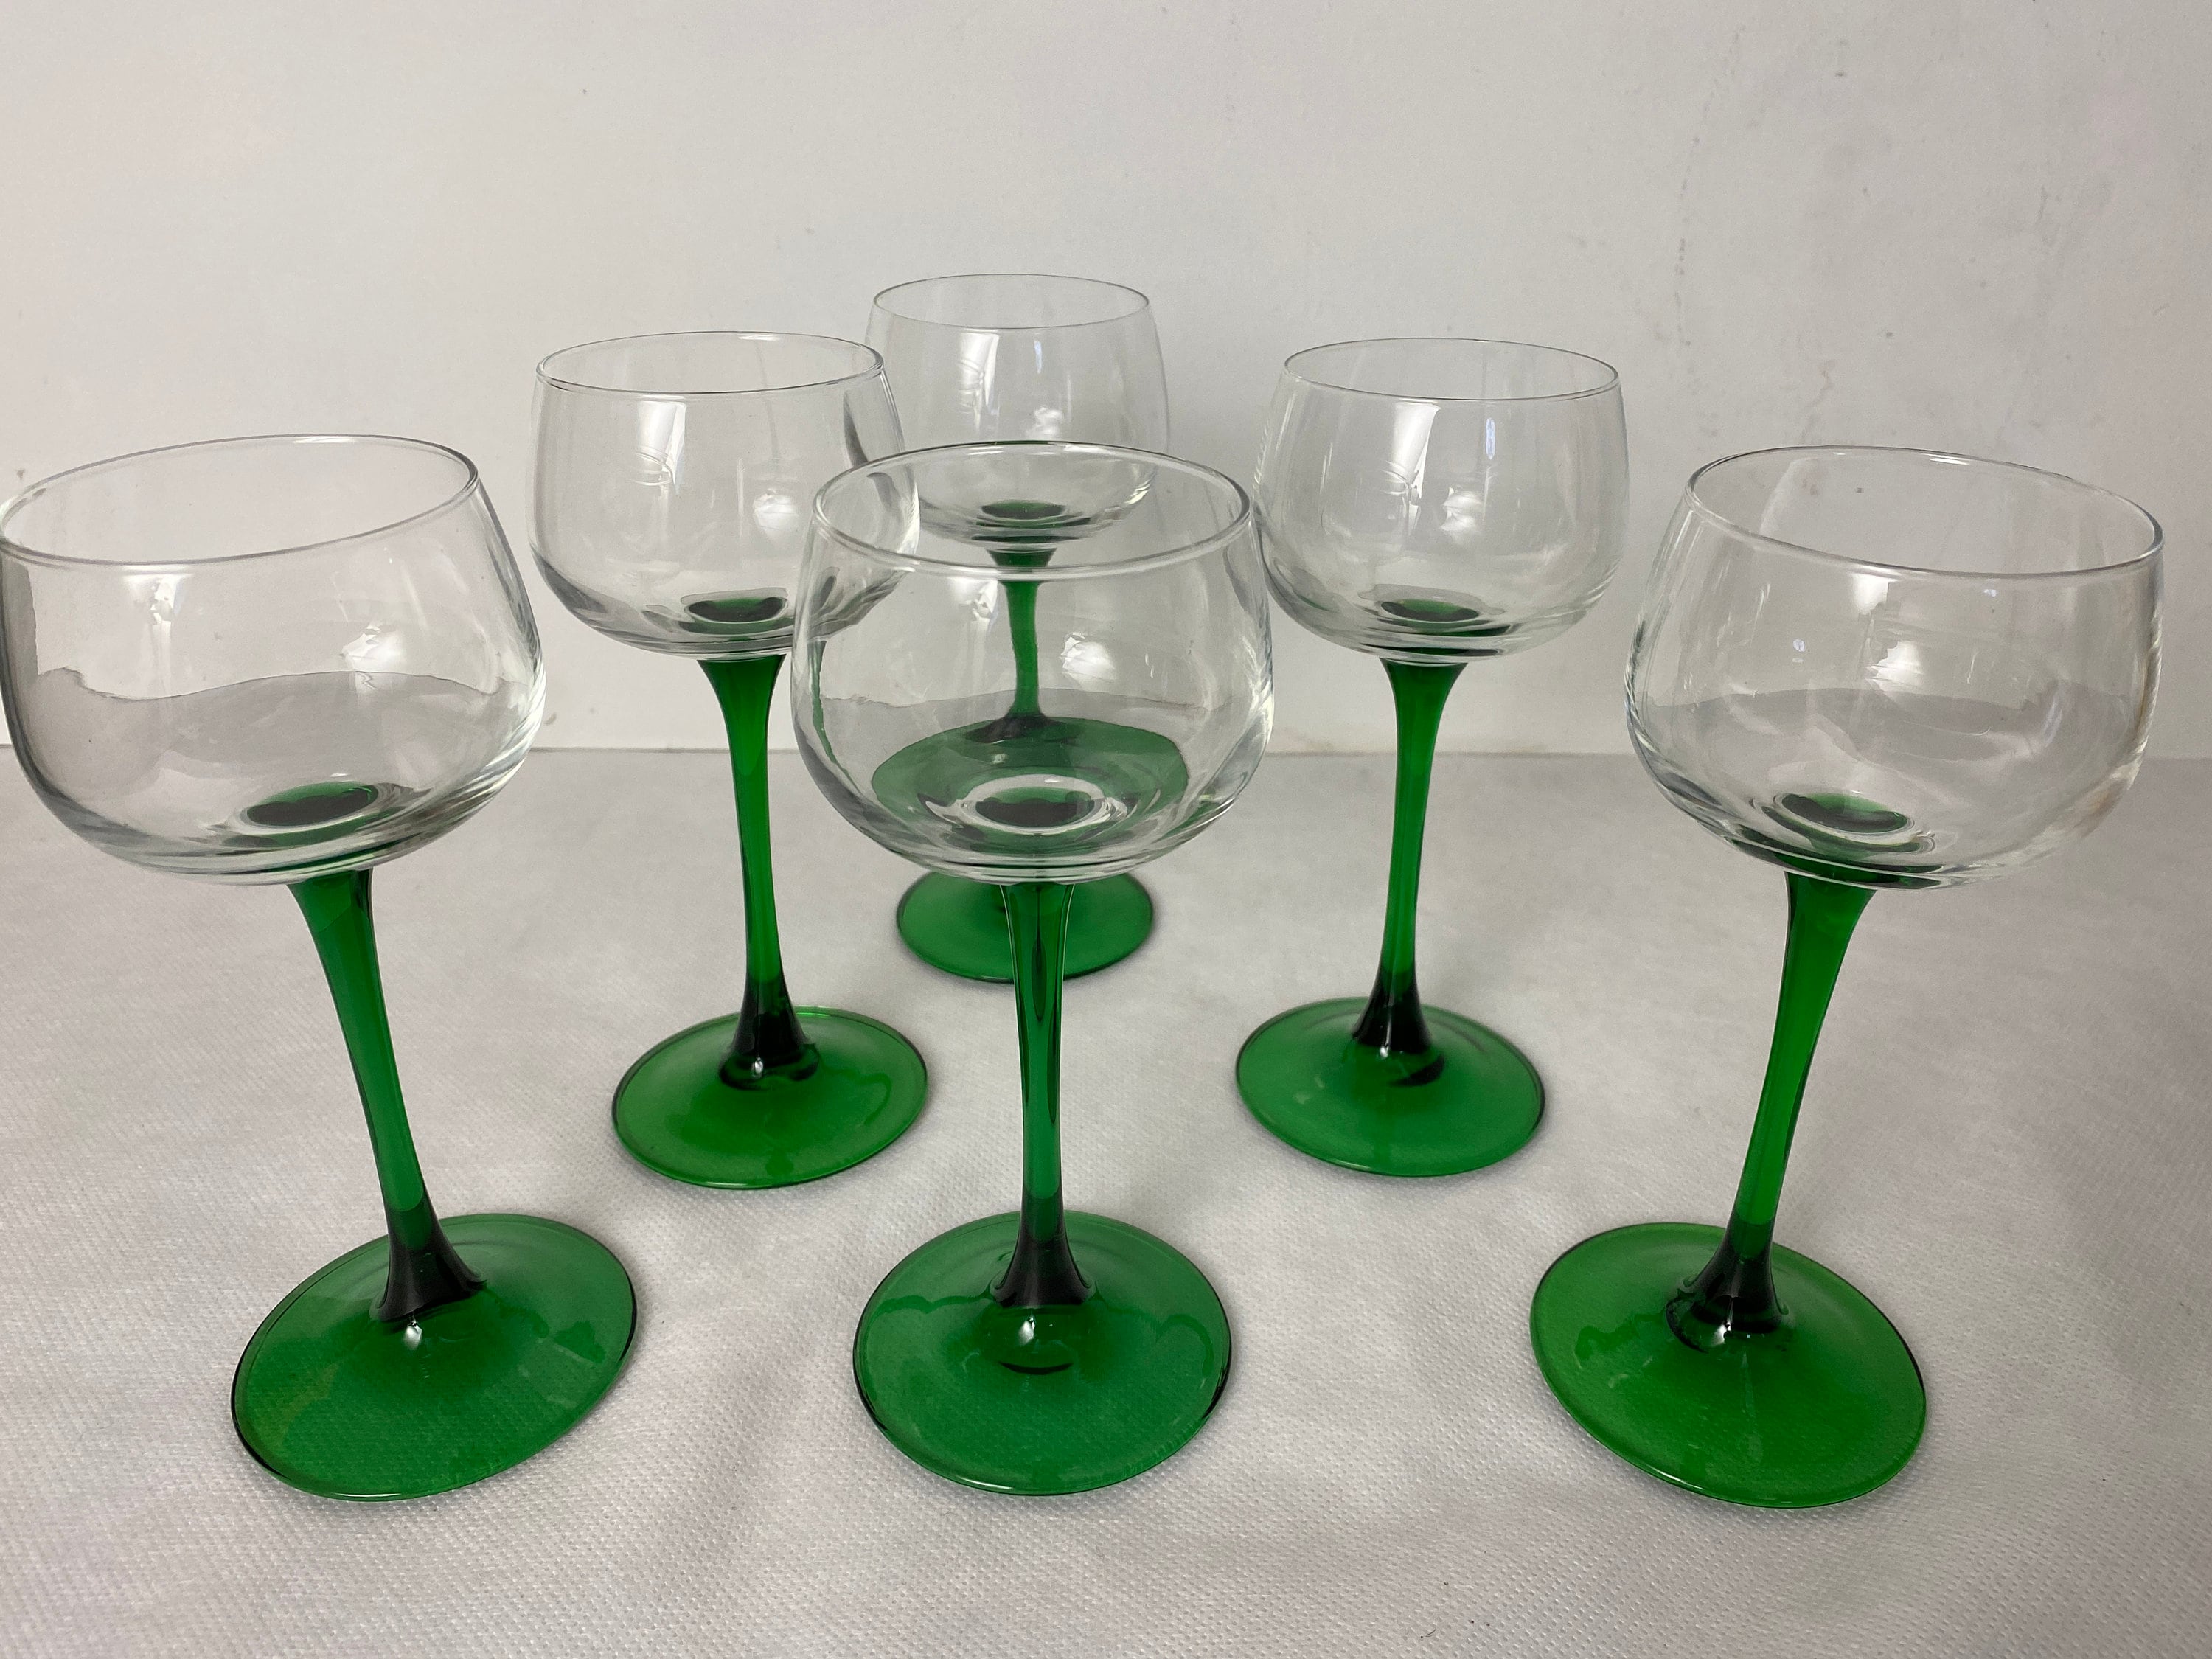 BENETI German Made Stemless Wine Glasses set 4